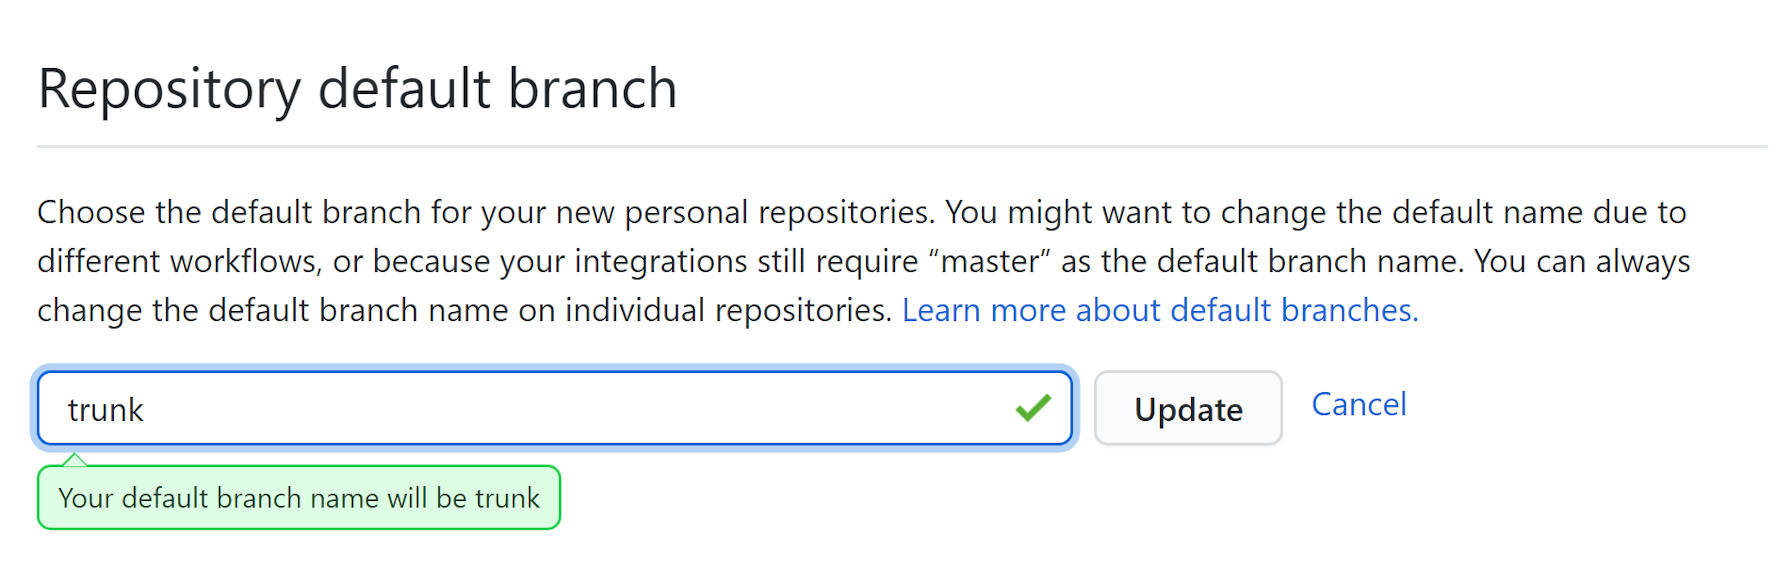 github-to-main-master-master-as-the-default-branch-on-all-new-repositories-starting-next-month GitHub使用'Main'代替'Master'作为默认分支从下个月开始在所有新存储库上运行